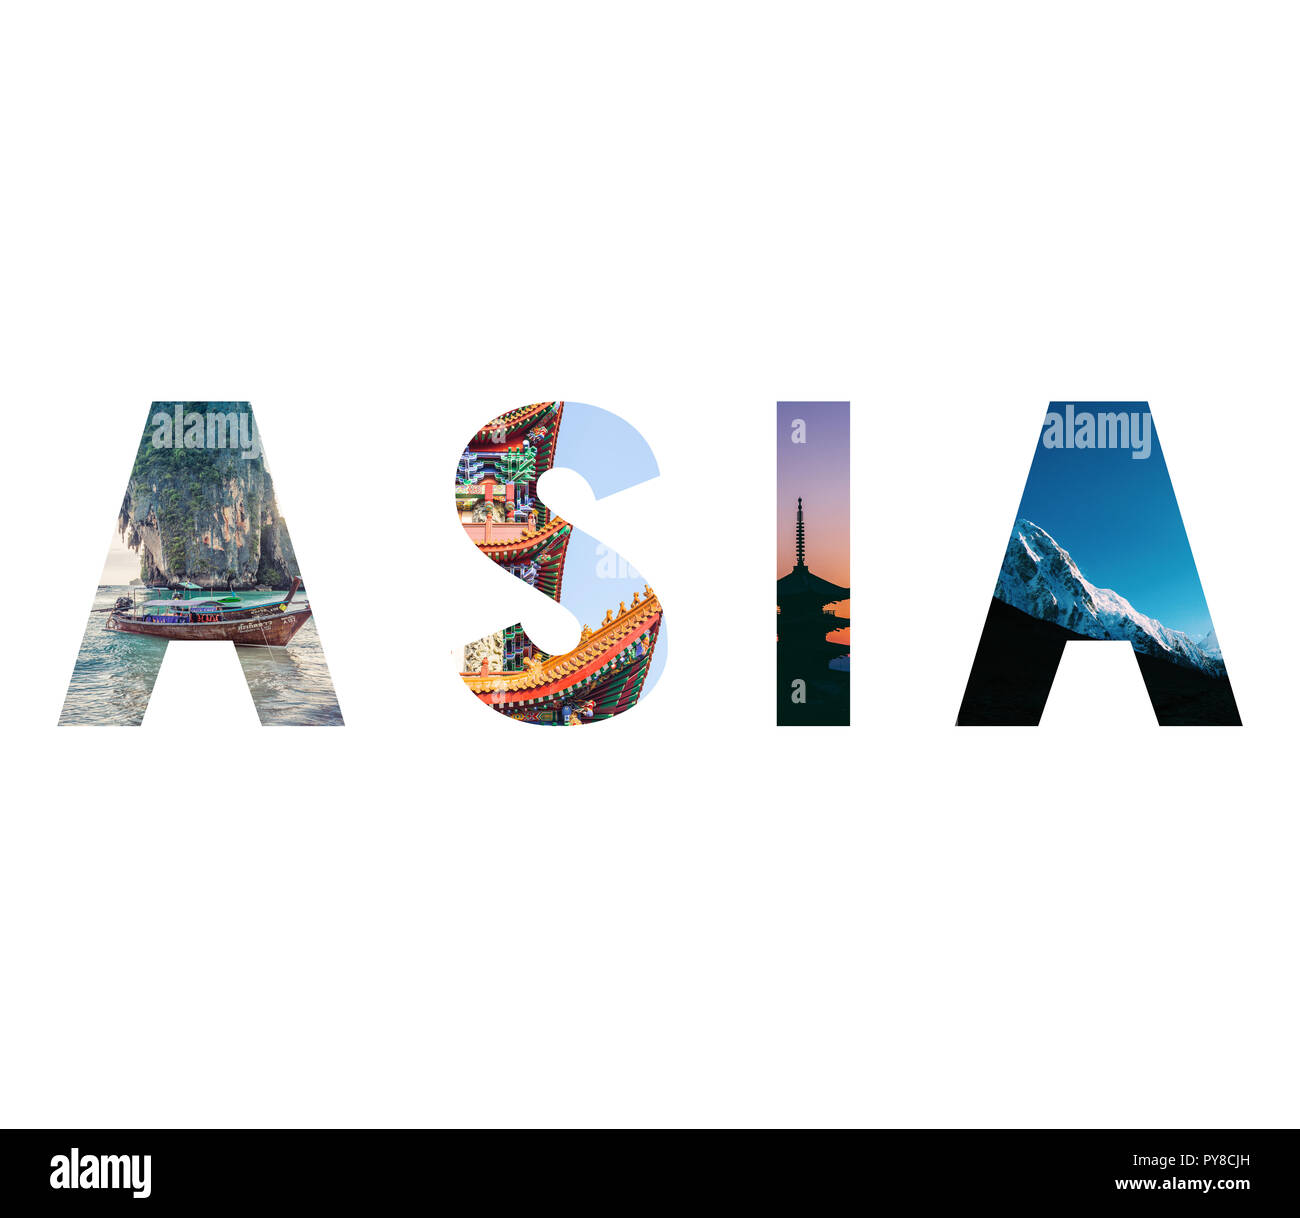 Explore Asia Minimalist Travel Poster.jpg - PYDTYY Stock Photo